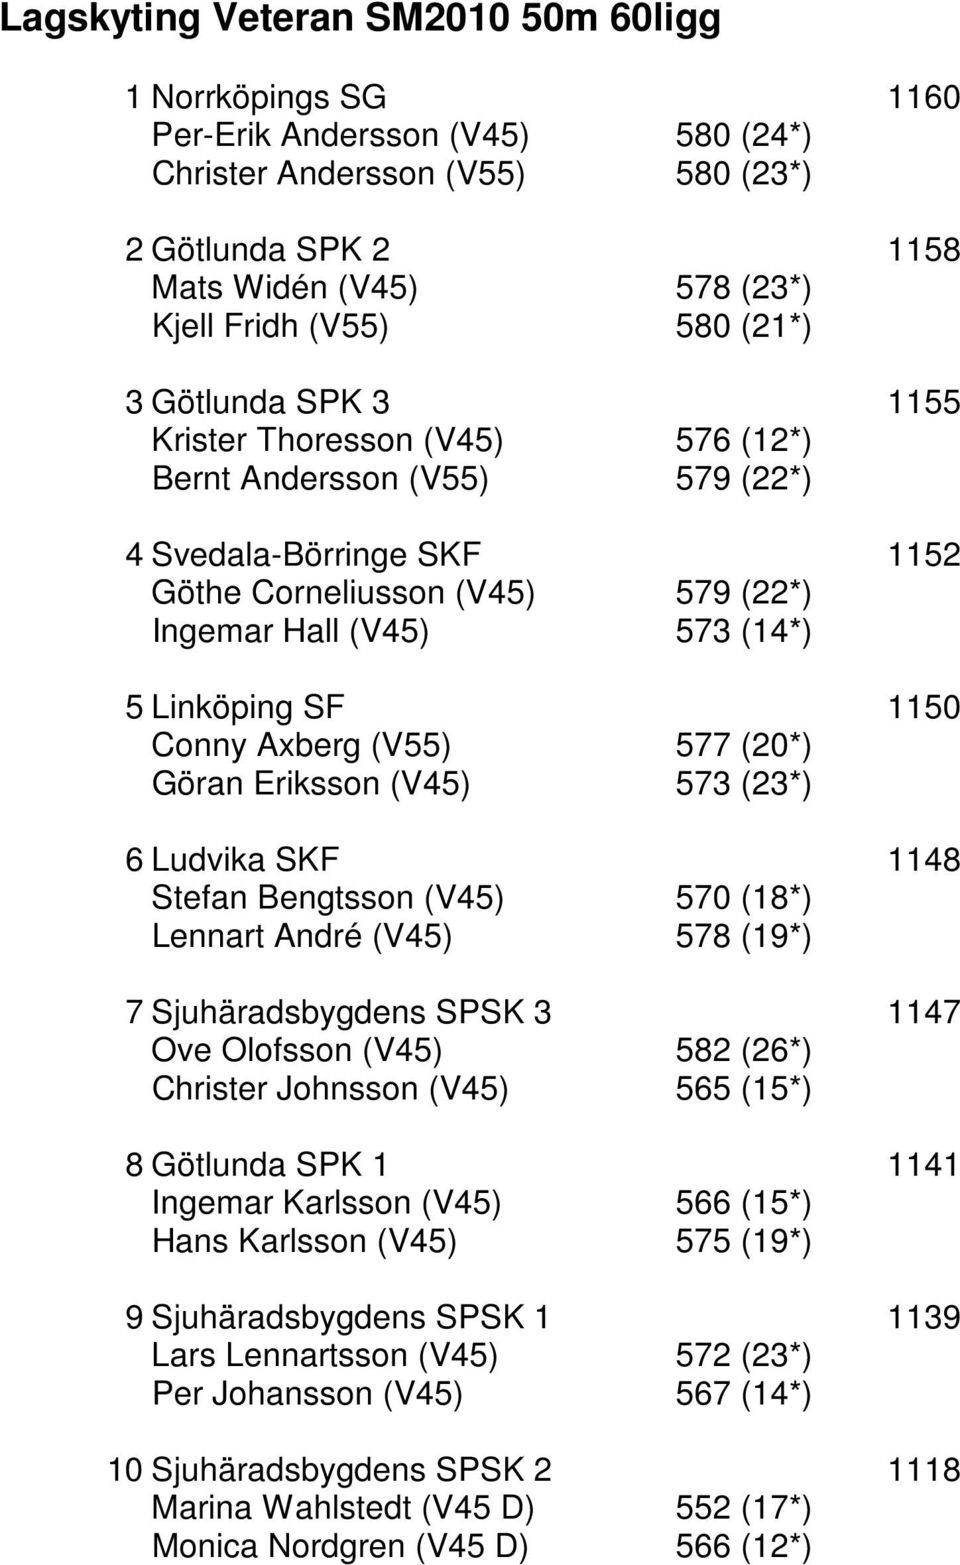 1150 Conny Axberg (V55) 577 (20*) Göran Eriksson (V45) 573 (23*) 6 Ludvika SKF 1148 Stefan Bengtsson (V45) 570 (18*) Lennart André (V45) 578 (19*) 7 Sjuhäradsbygdens SPSK 3 1147 Ove Olofsson (V45)